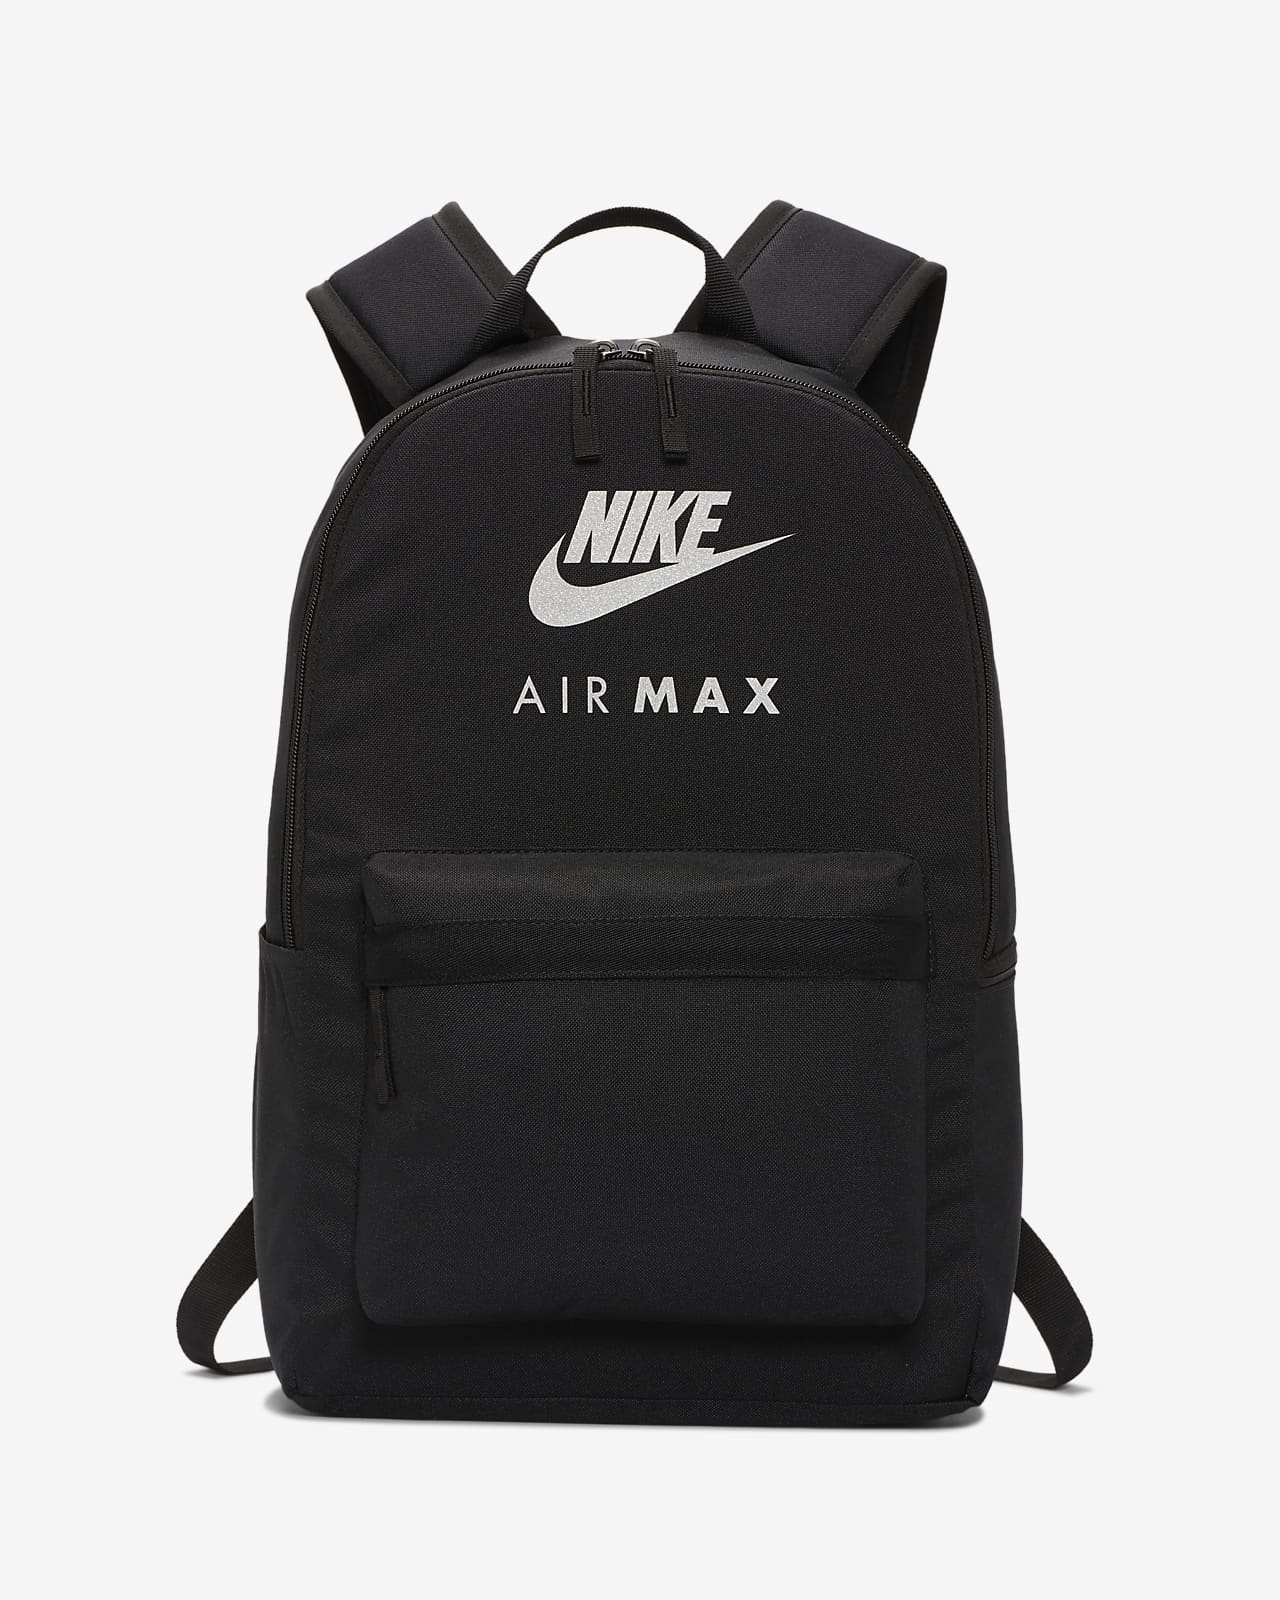 nike heritage backpack size